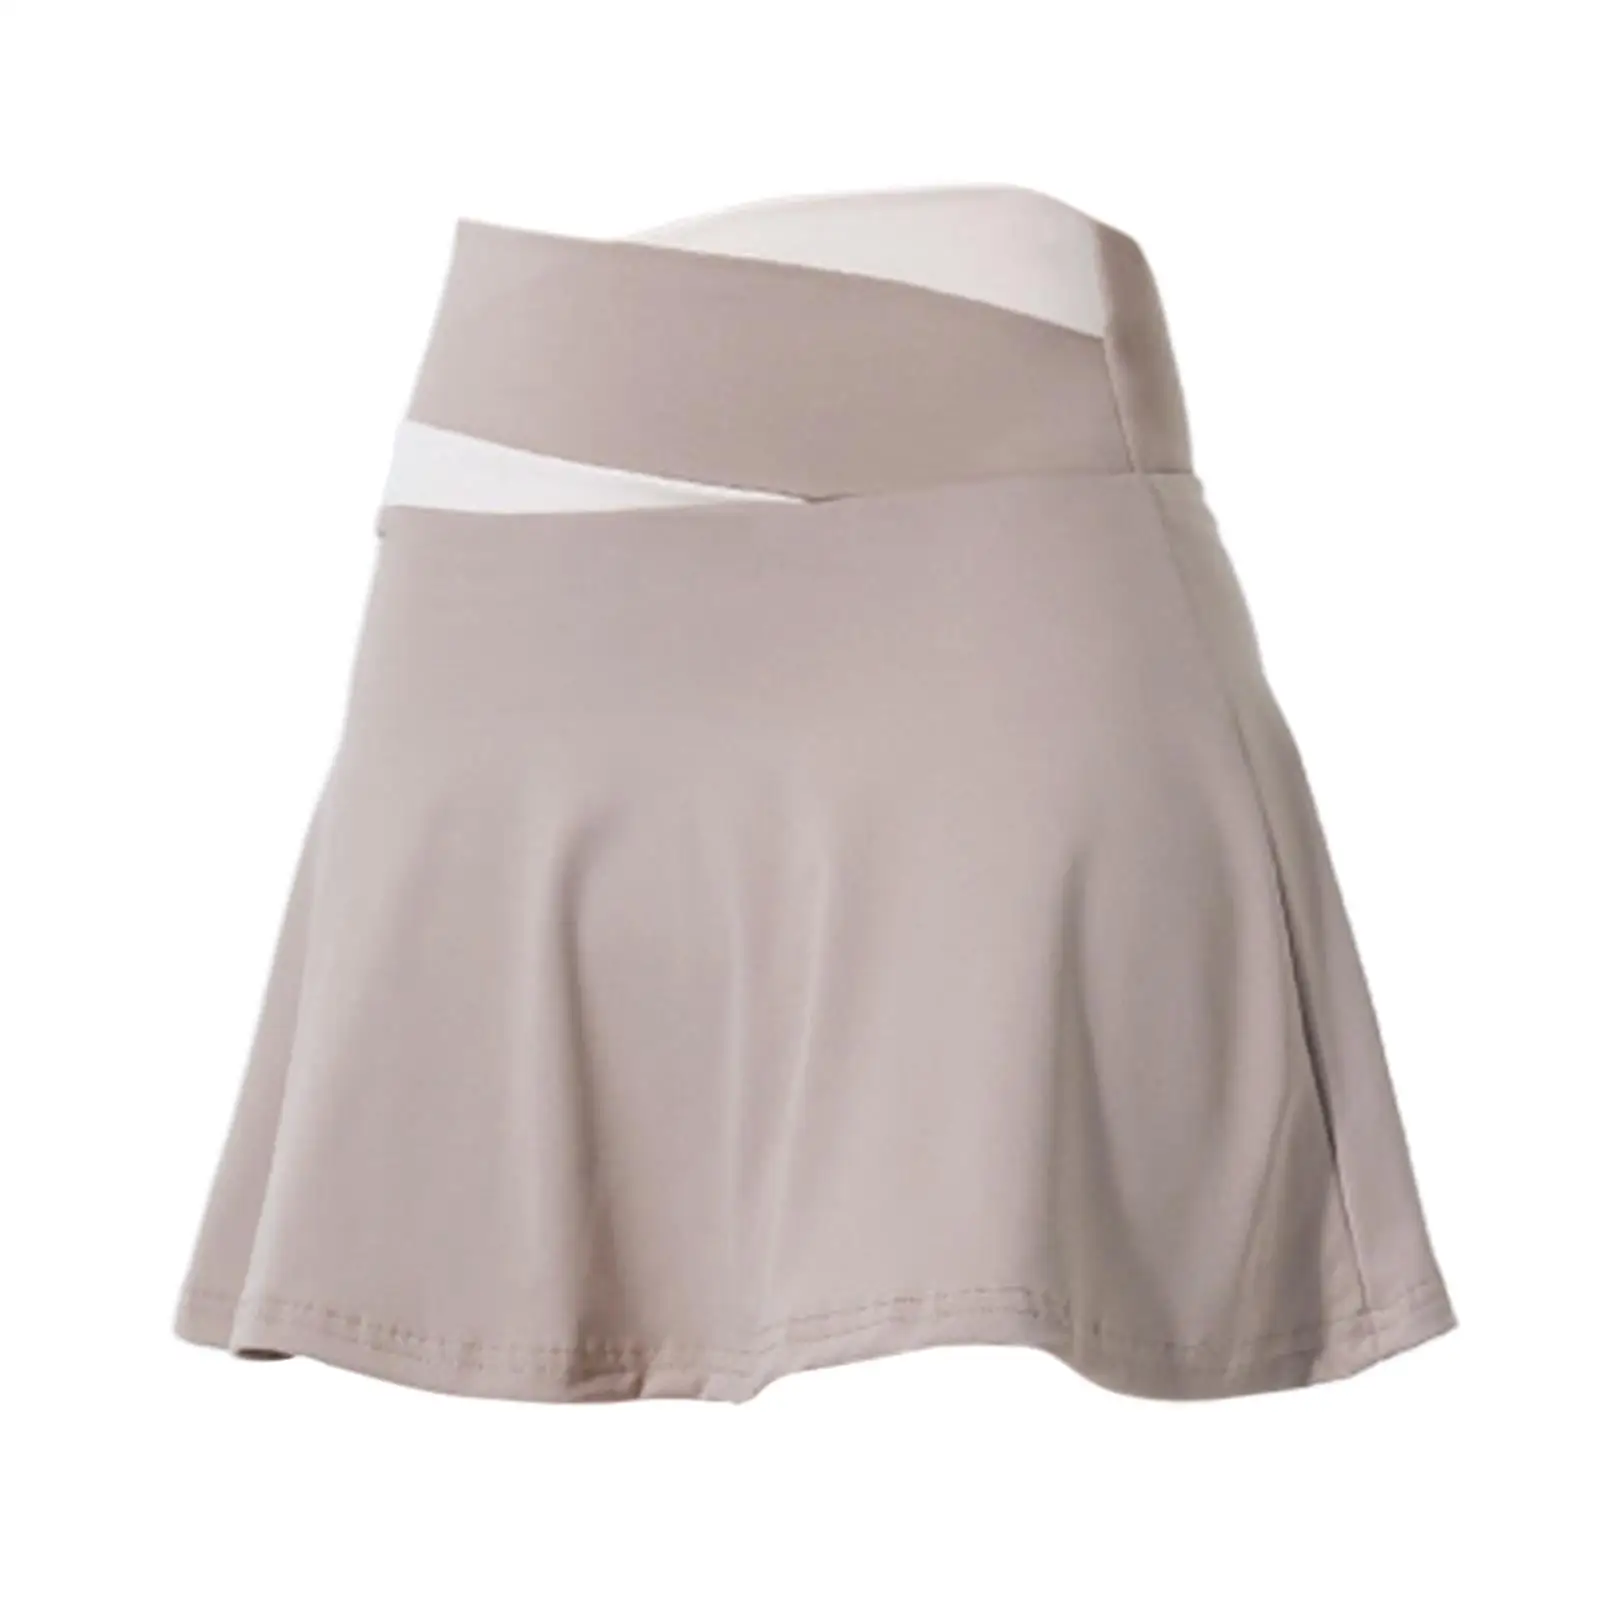 Tennis Skirt Short Skirts Soft Activewear Outfits Golf Skorts Badminton Skirt for Running Yoga Exercise Summer Beach